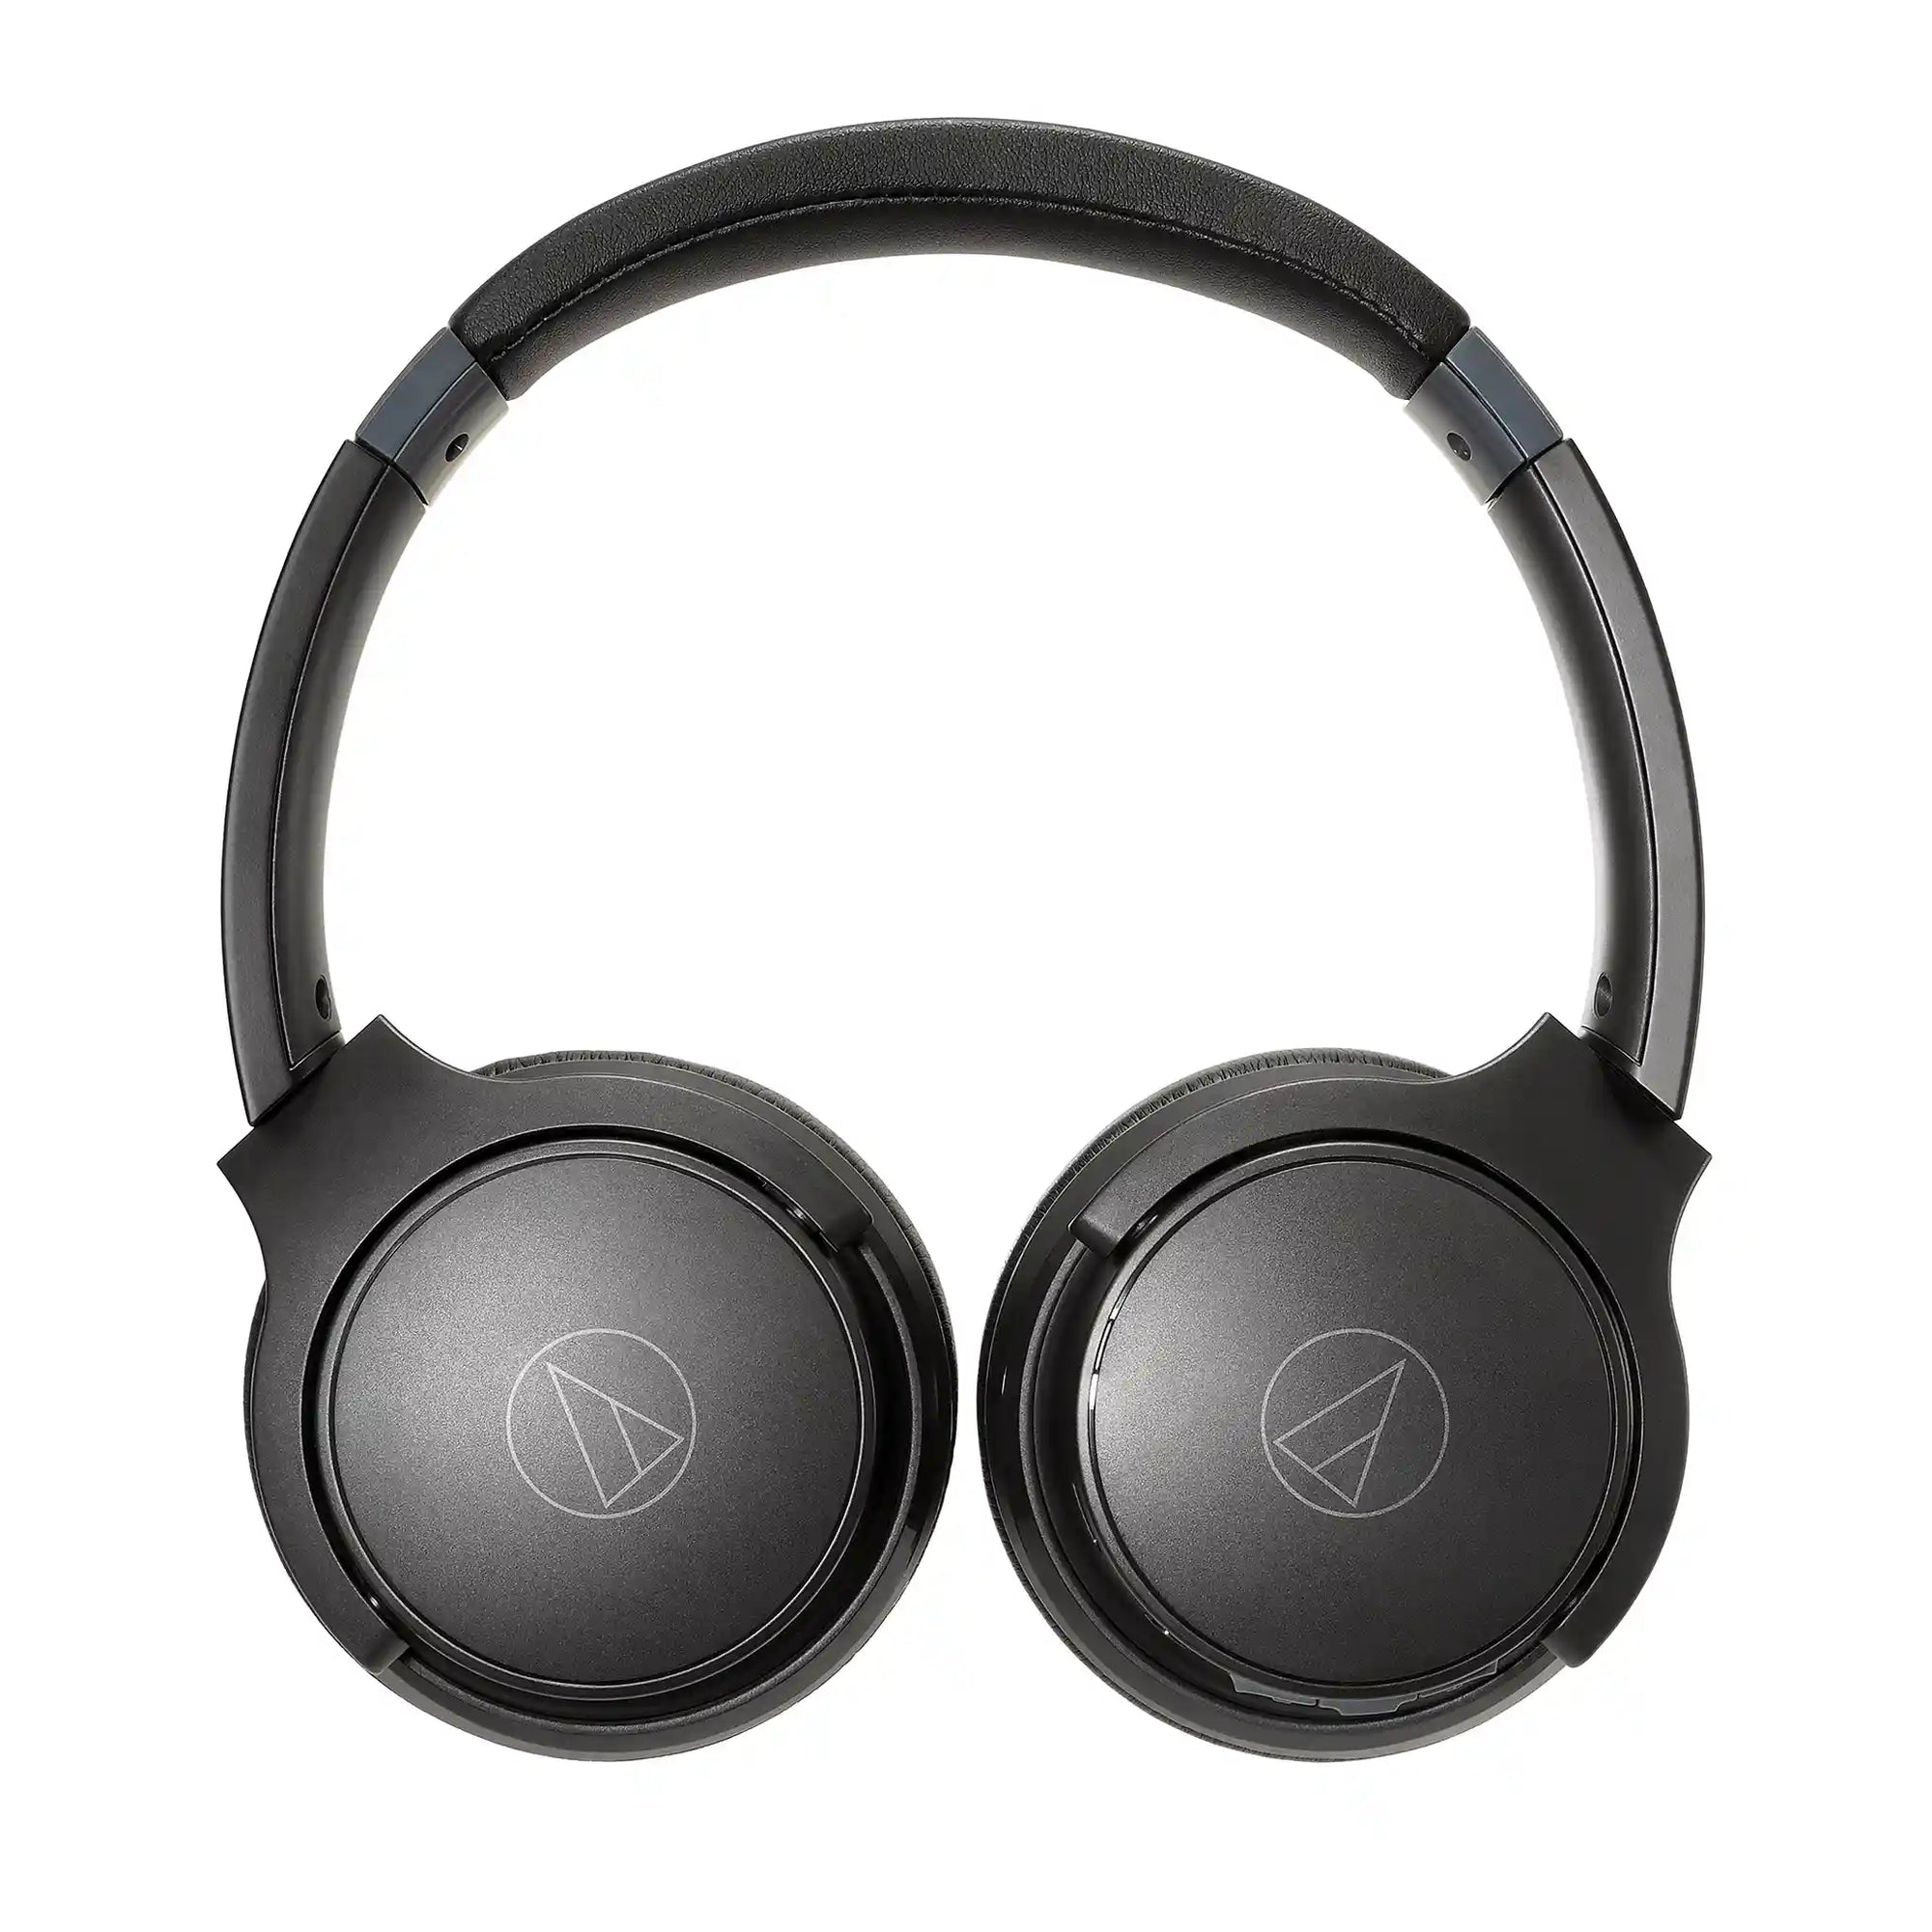 Audio-Technica Consumer ATH-M50xBT2 Wireless Over-Ear Headphones (Black)